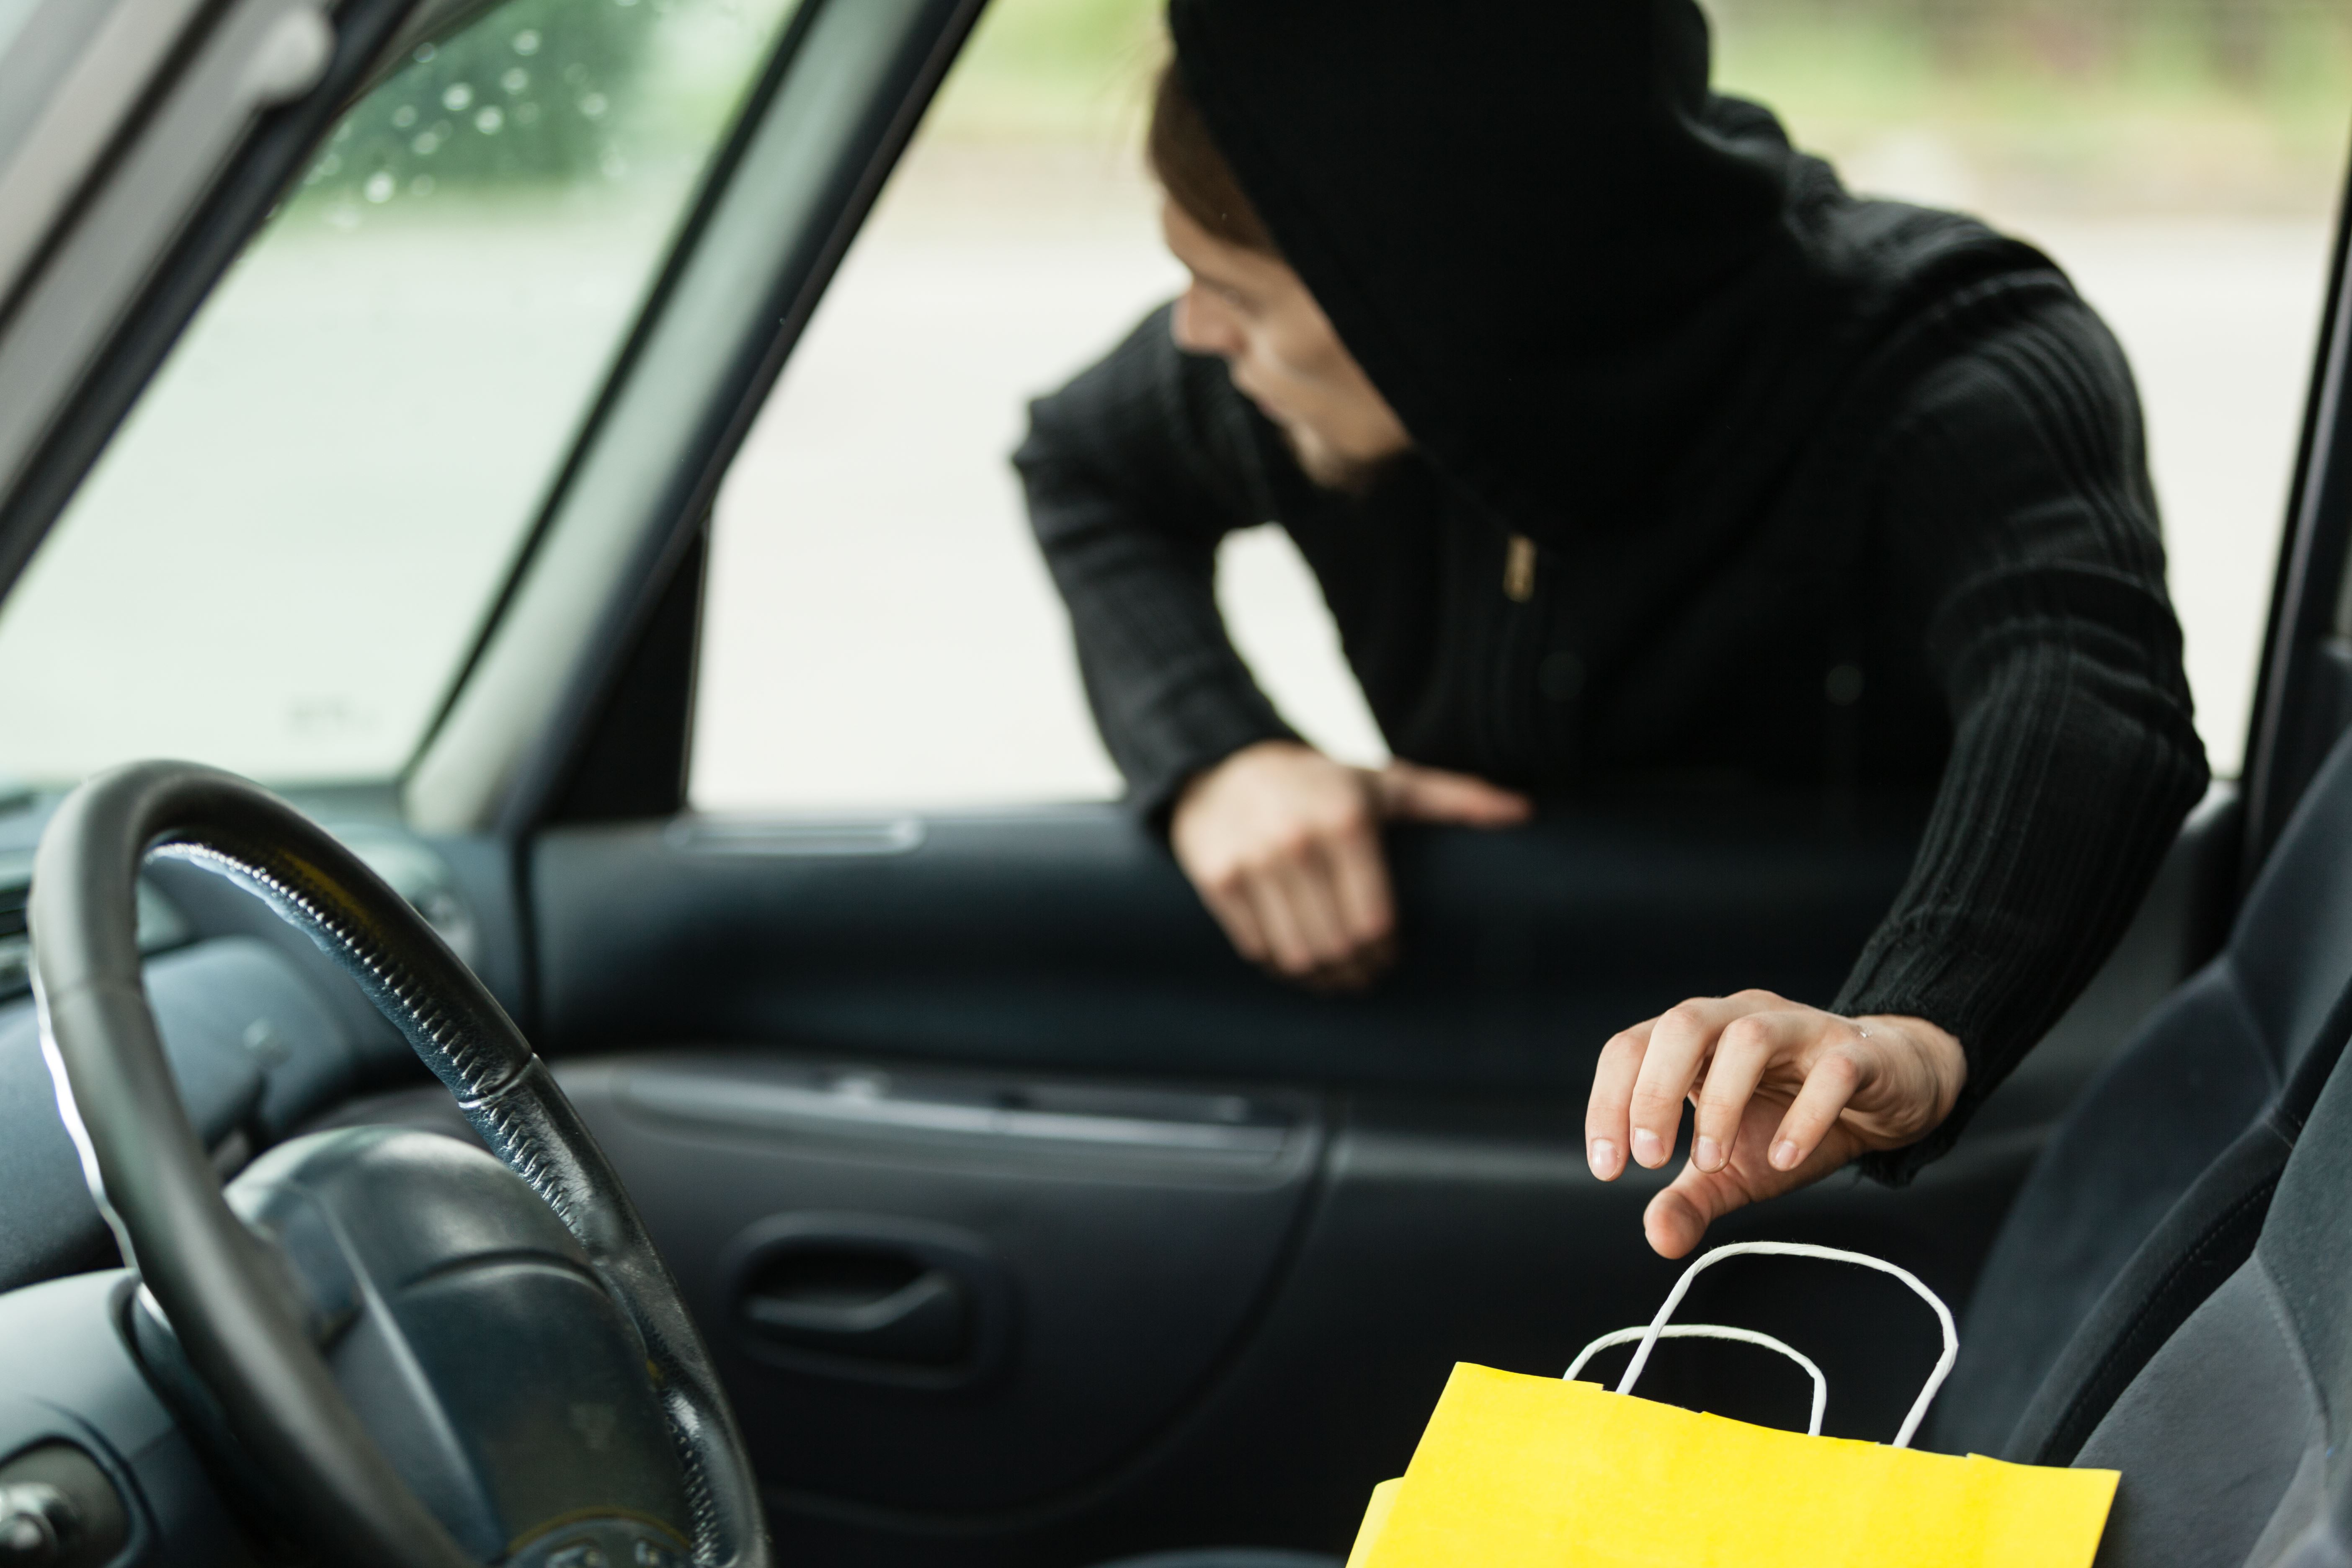 Man stealing a shopping bag - shoplifting and depression